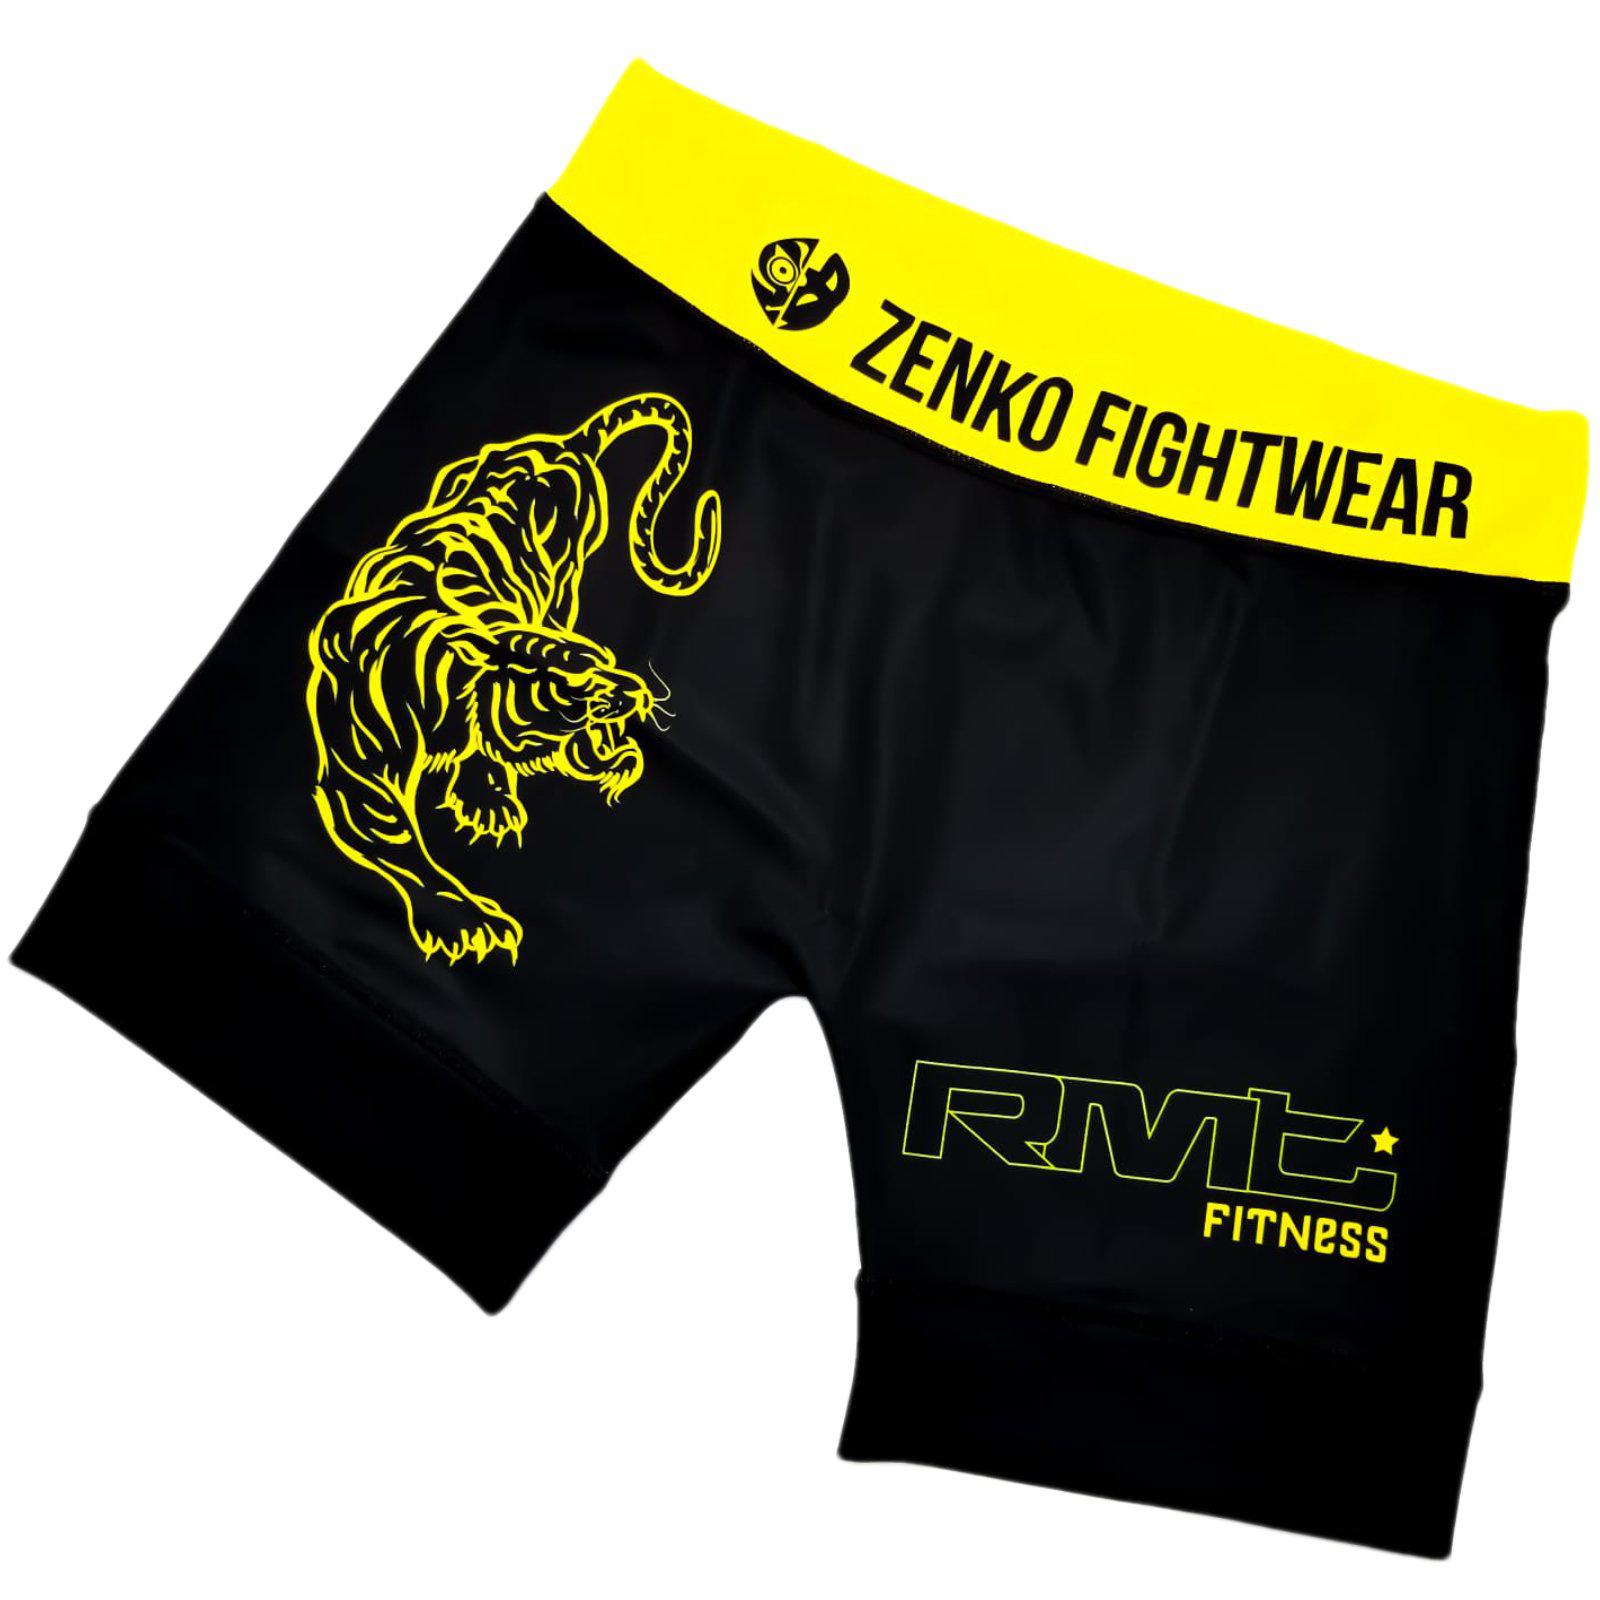 Rad Muay Thai RMT Vale Tudo Shorts Zenko Fightwear